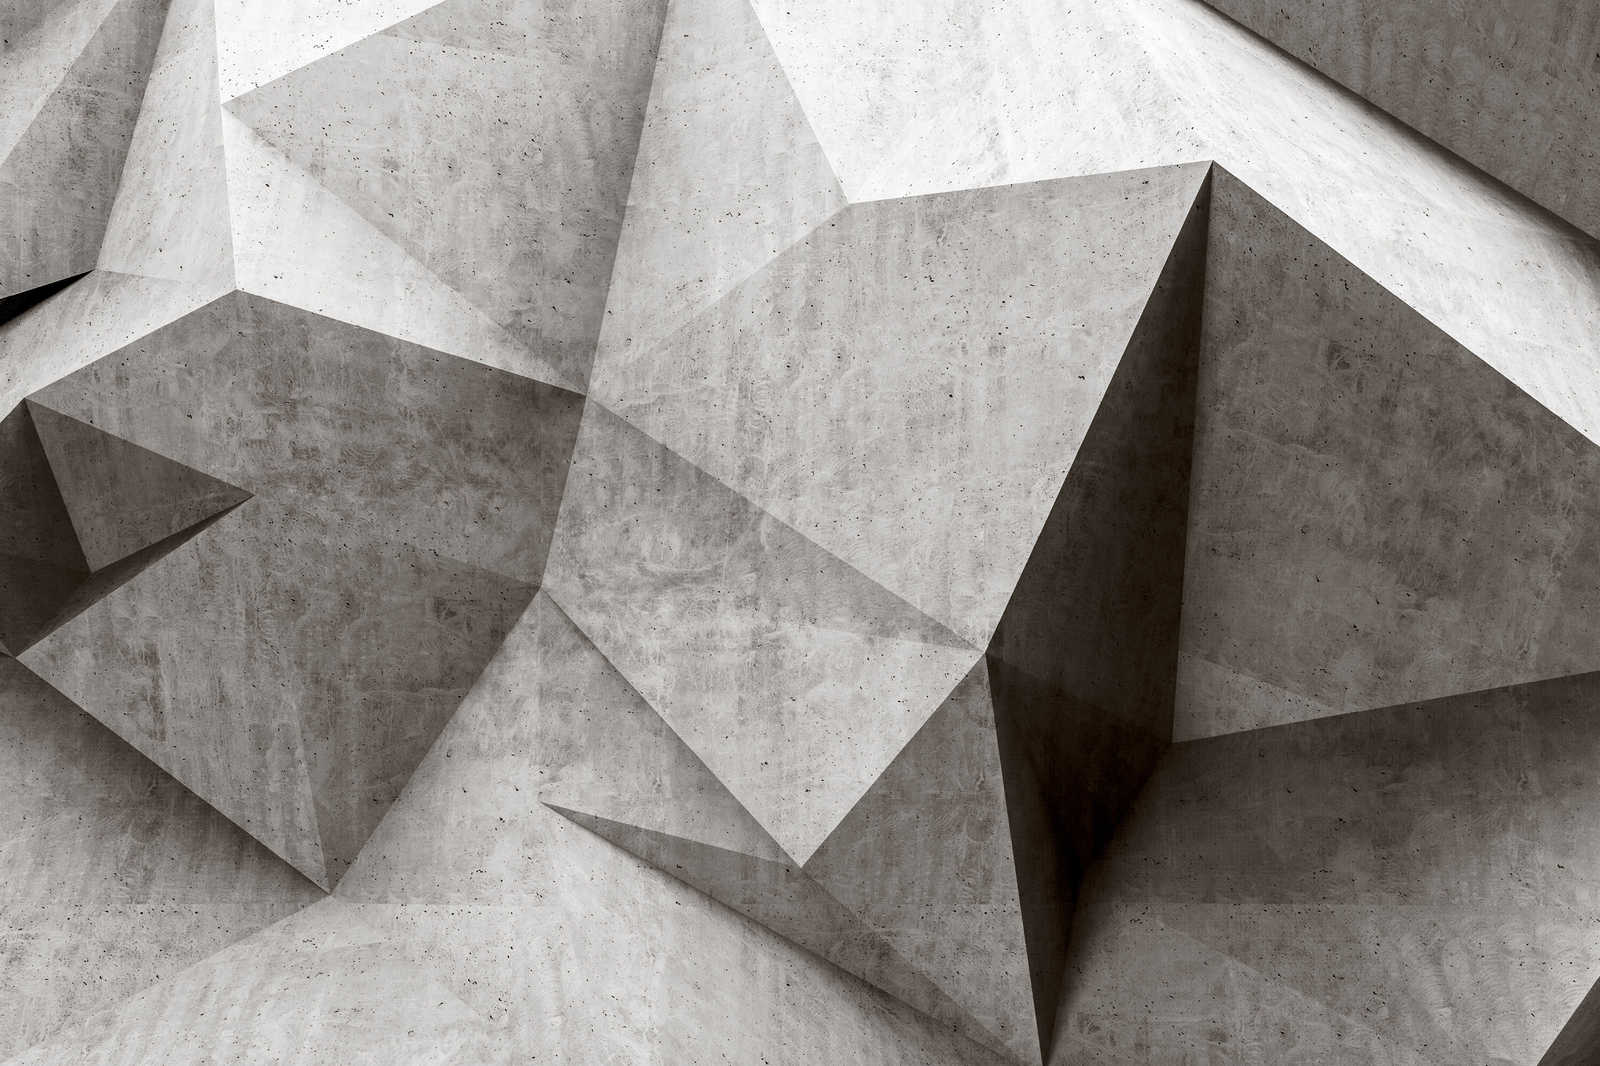             Boulder 1 - Coole 3D Beton-Polygone Leinwandbild – 0,90 m x 0,60 m
        